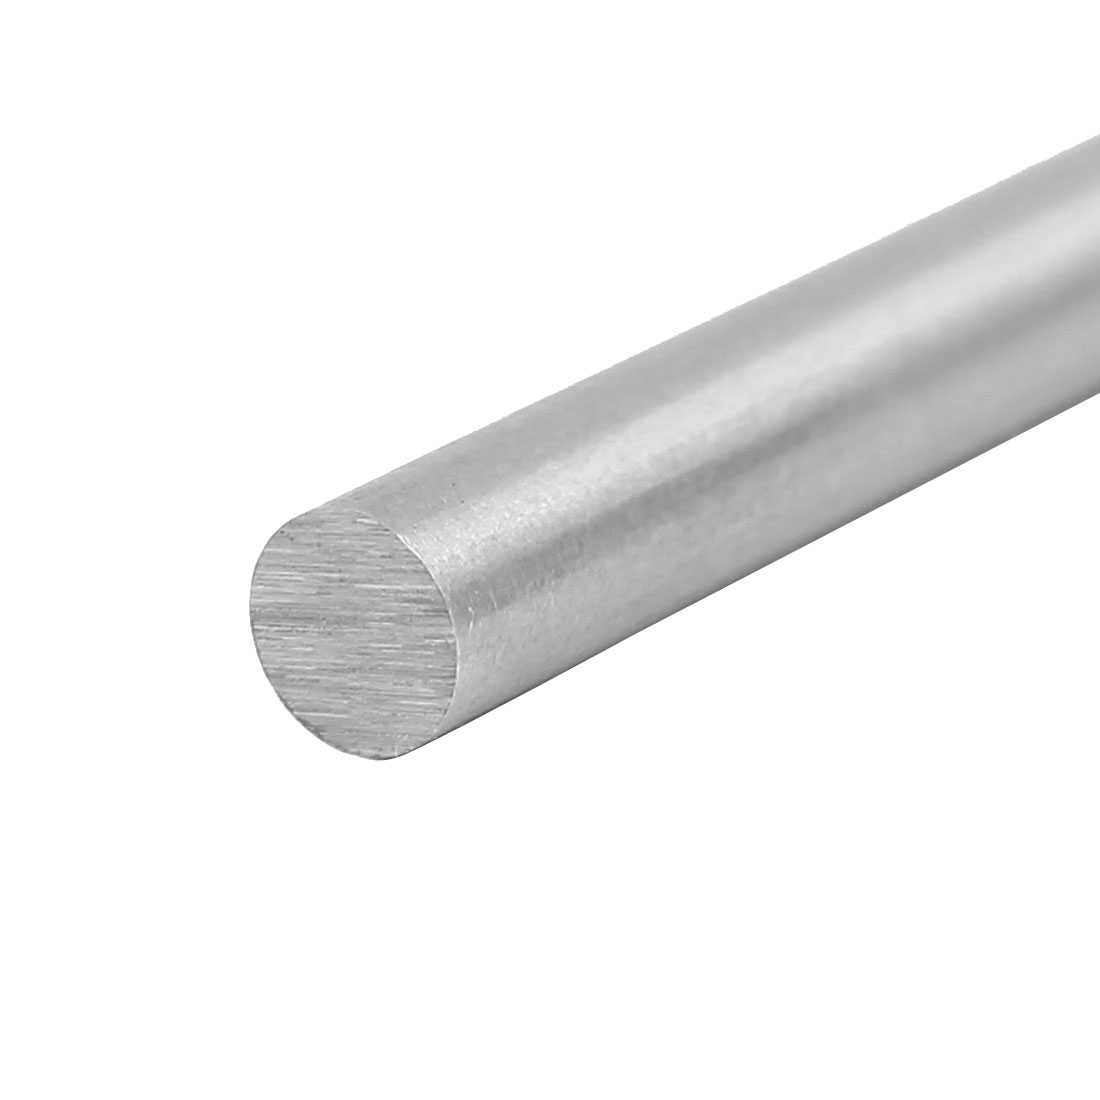 4.5mm Dia 200mm Length HSS Round Shaft Rod Bar Lathe Tools Gray 2pcs